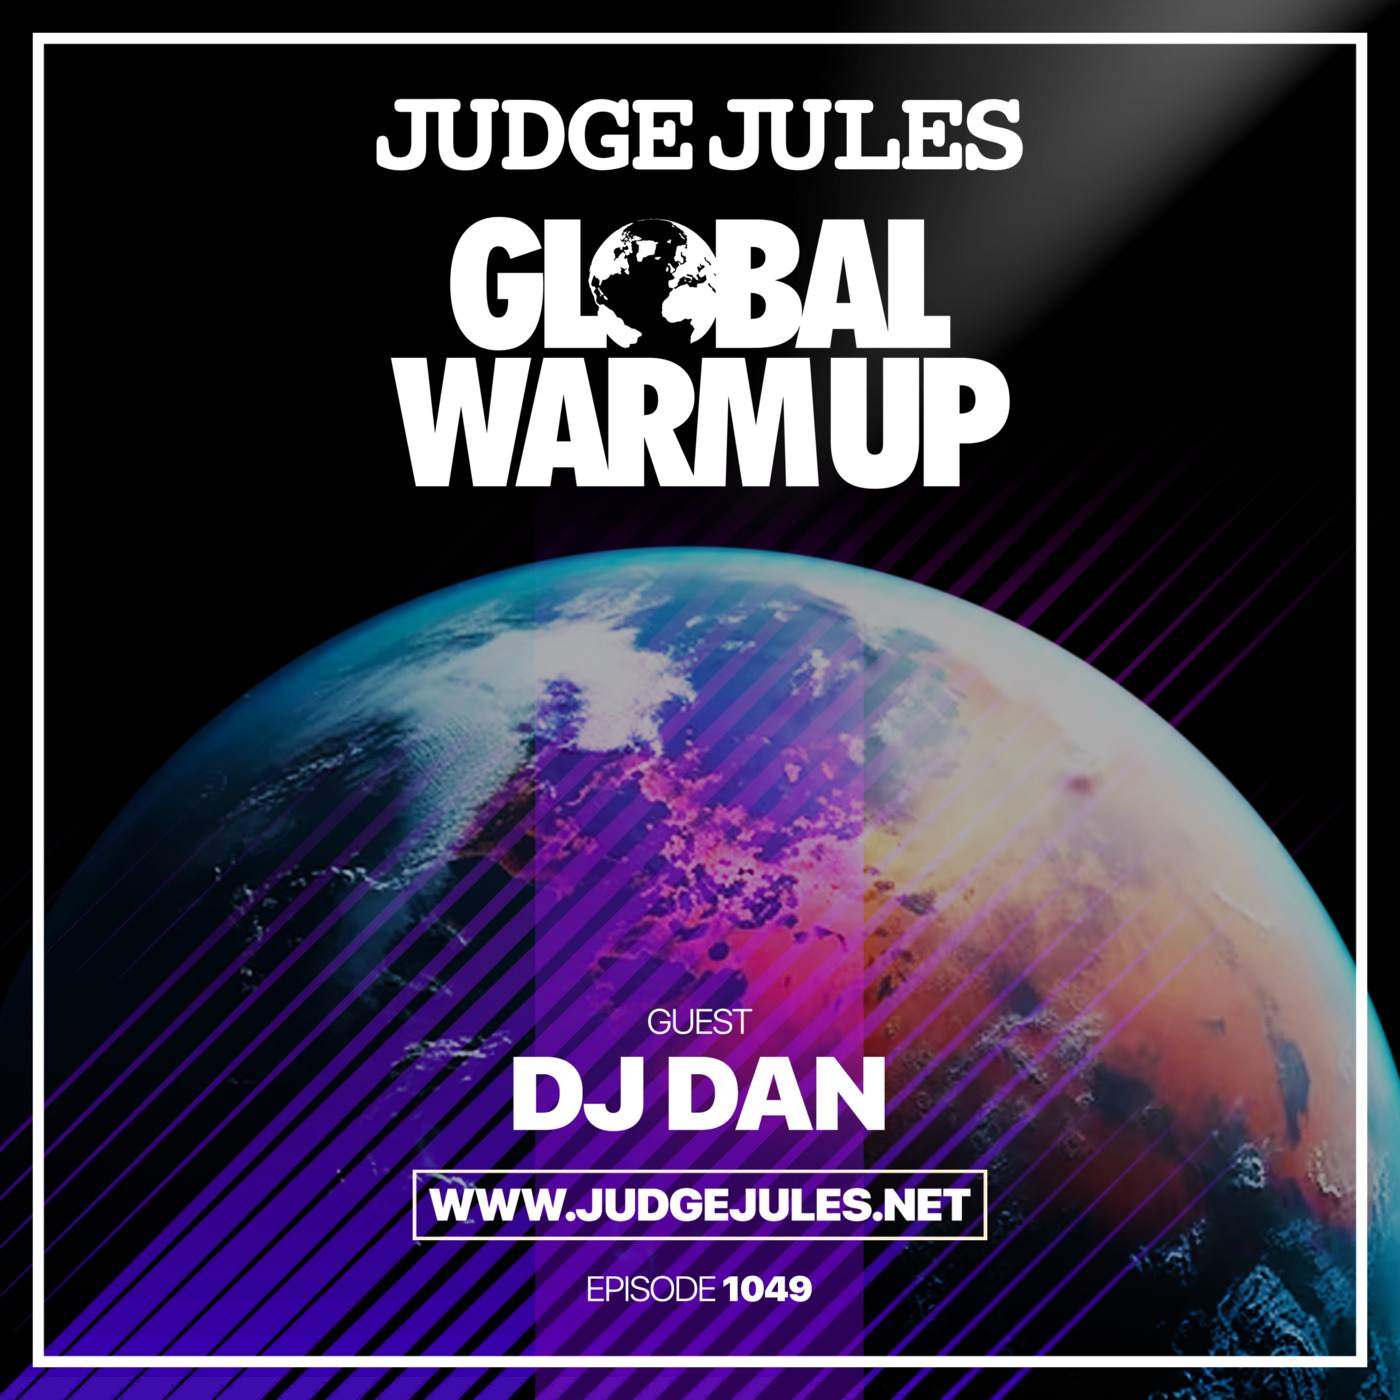 Episode 1049: JUDGE JULES PRESENTS THE GLOBAL WARM UP EPISODE 1049